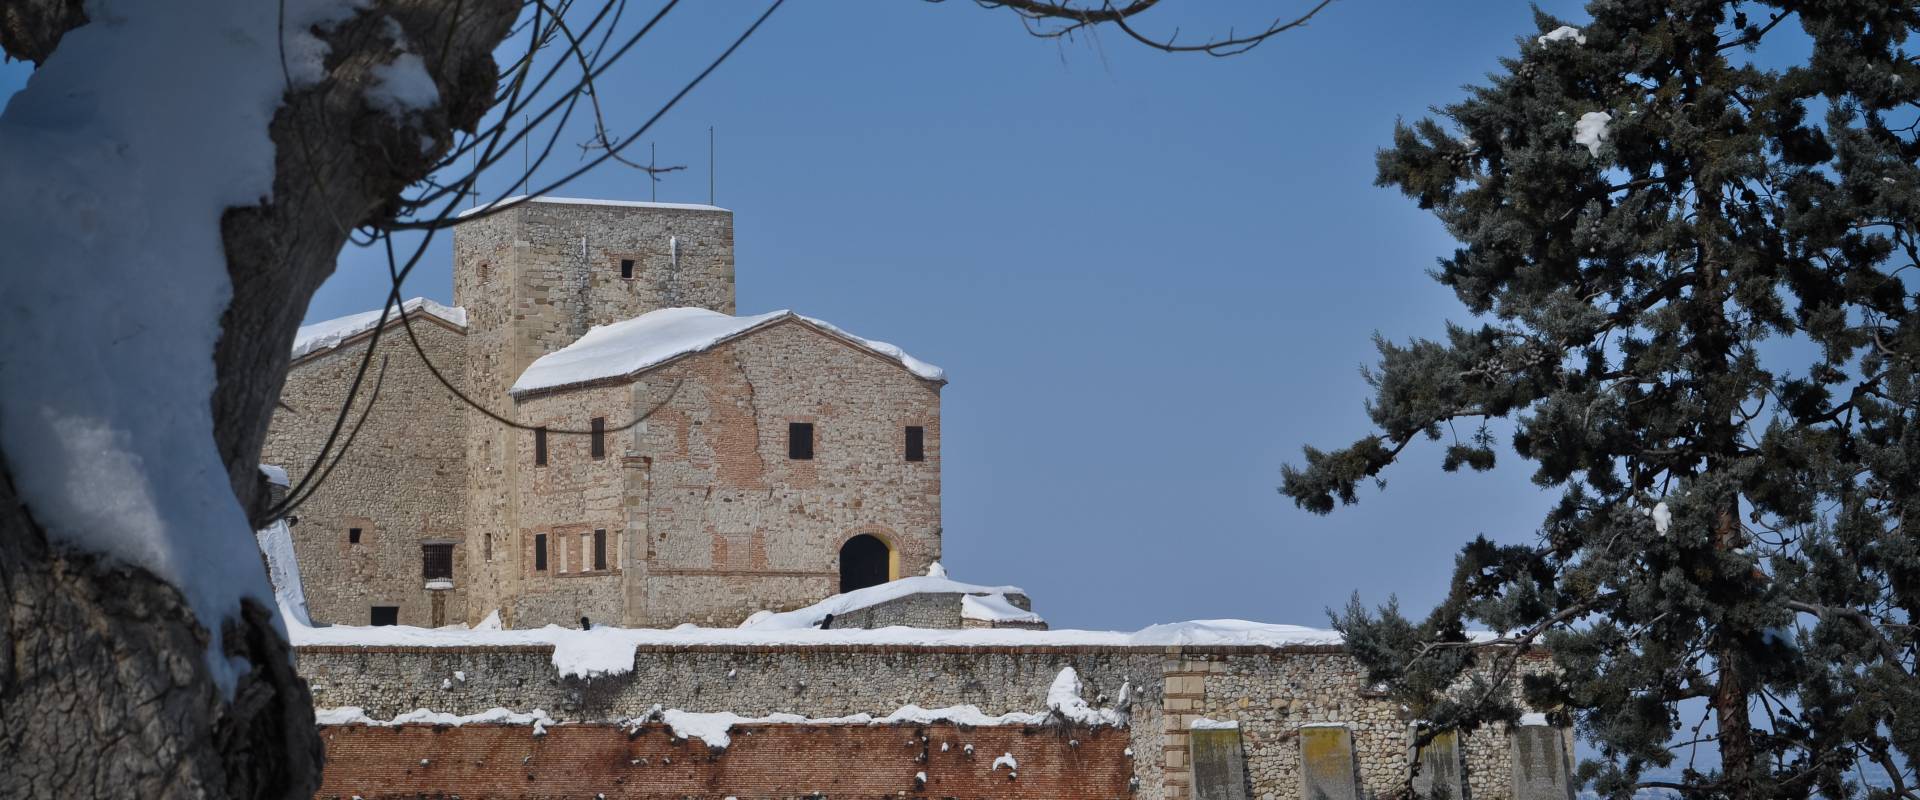 Verucchio Malatestian fortress with snow 2 photo by Alessandra D'Alba